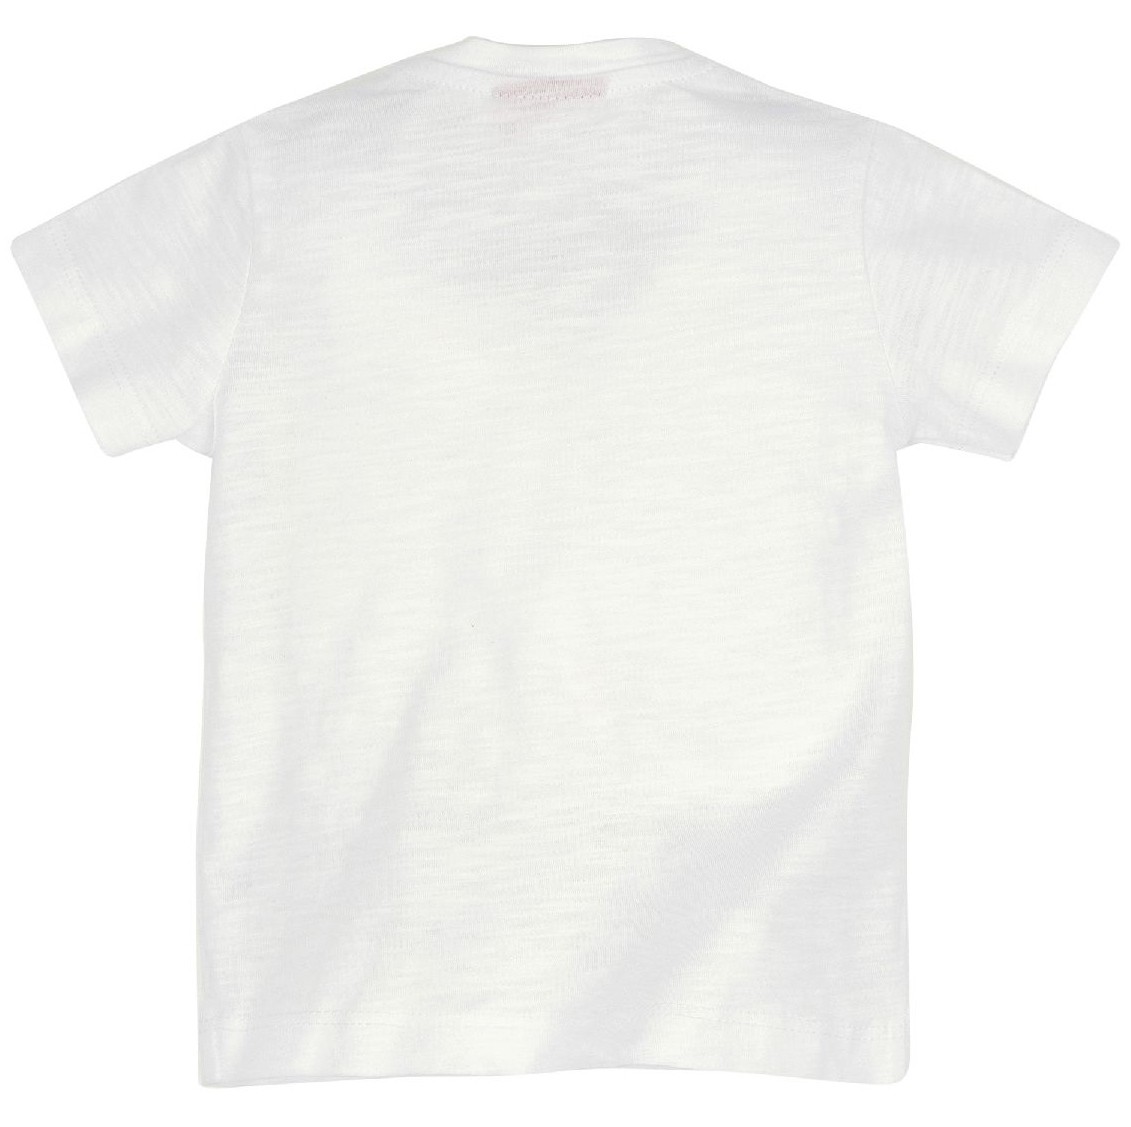 Aperçu: T-Shirt 'Gipfelkraxler'